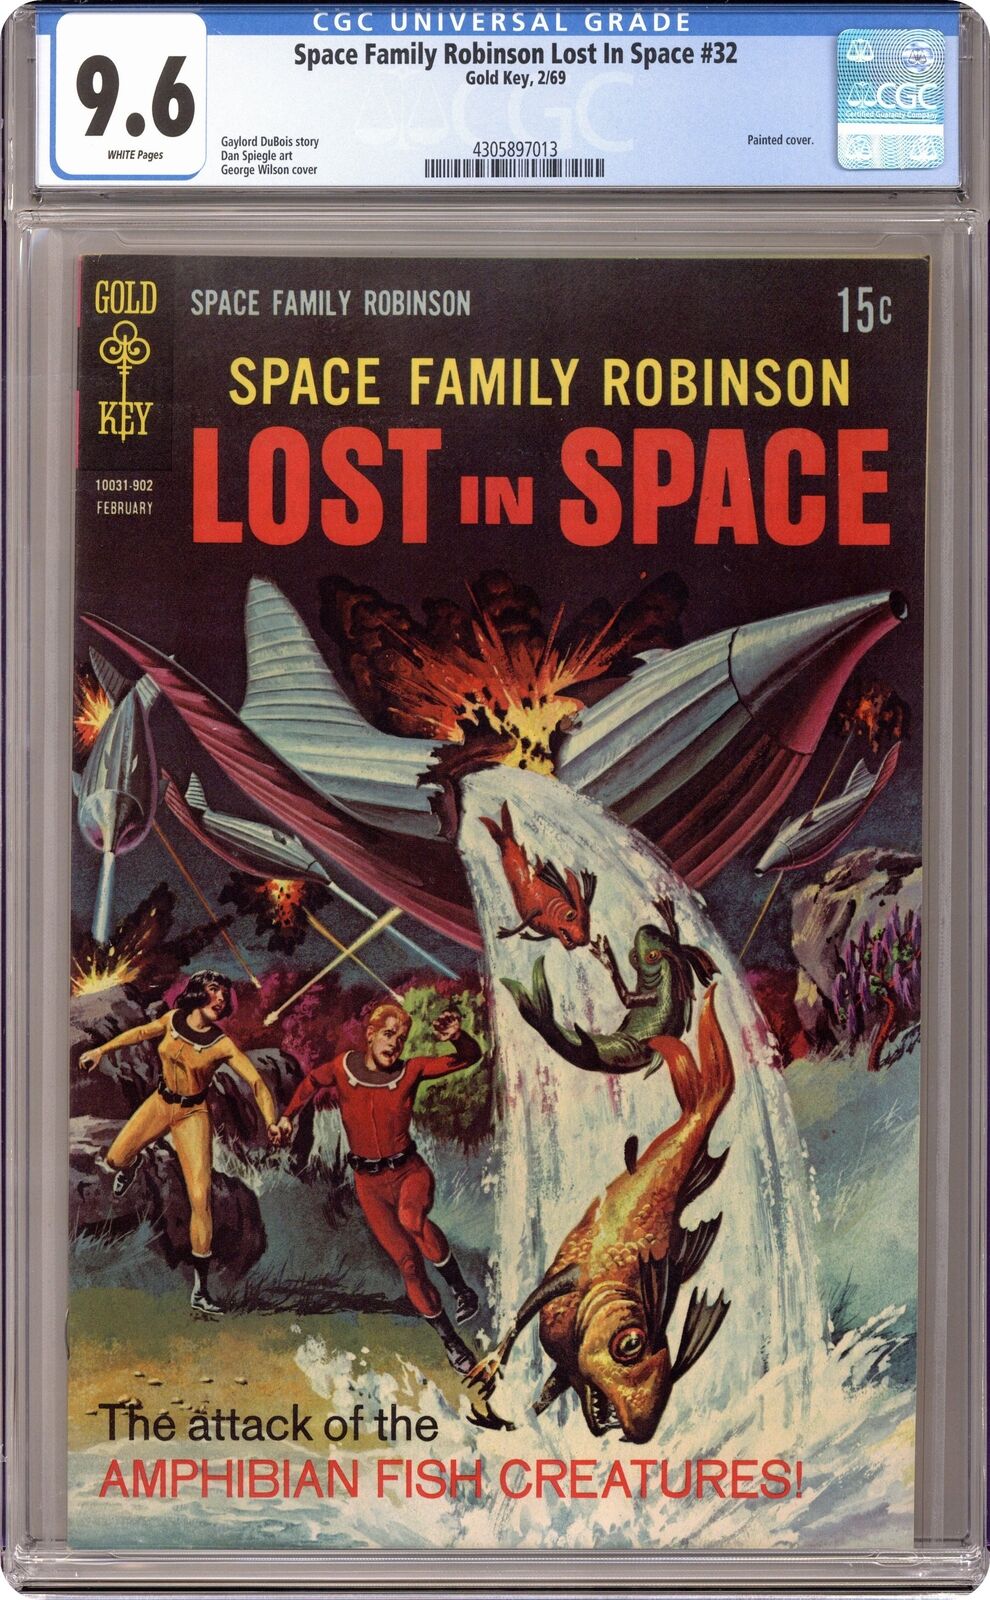 Space Family Robinson #32 CGC 9.6 1968 4305897013